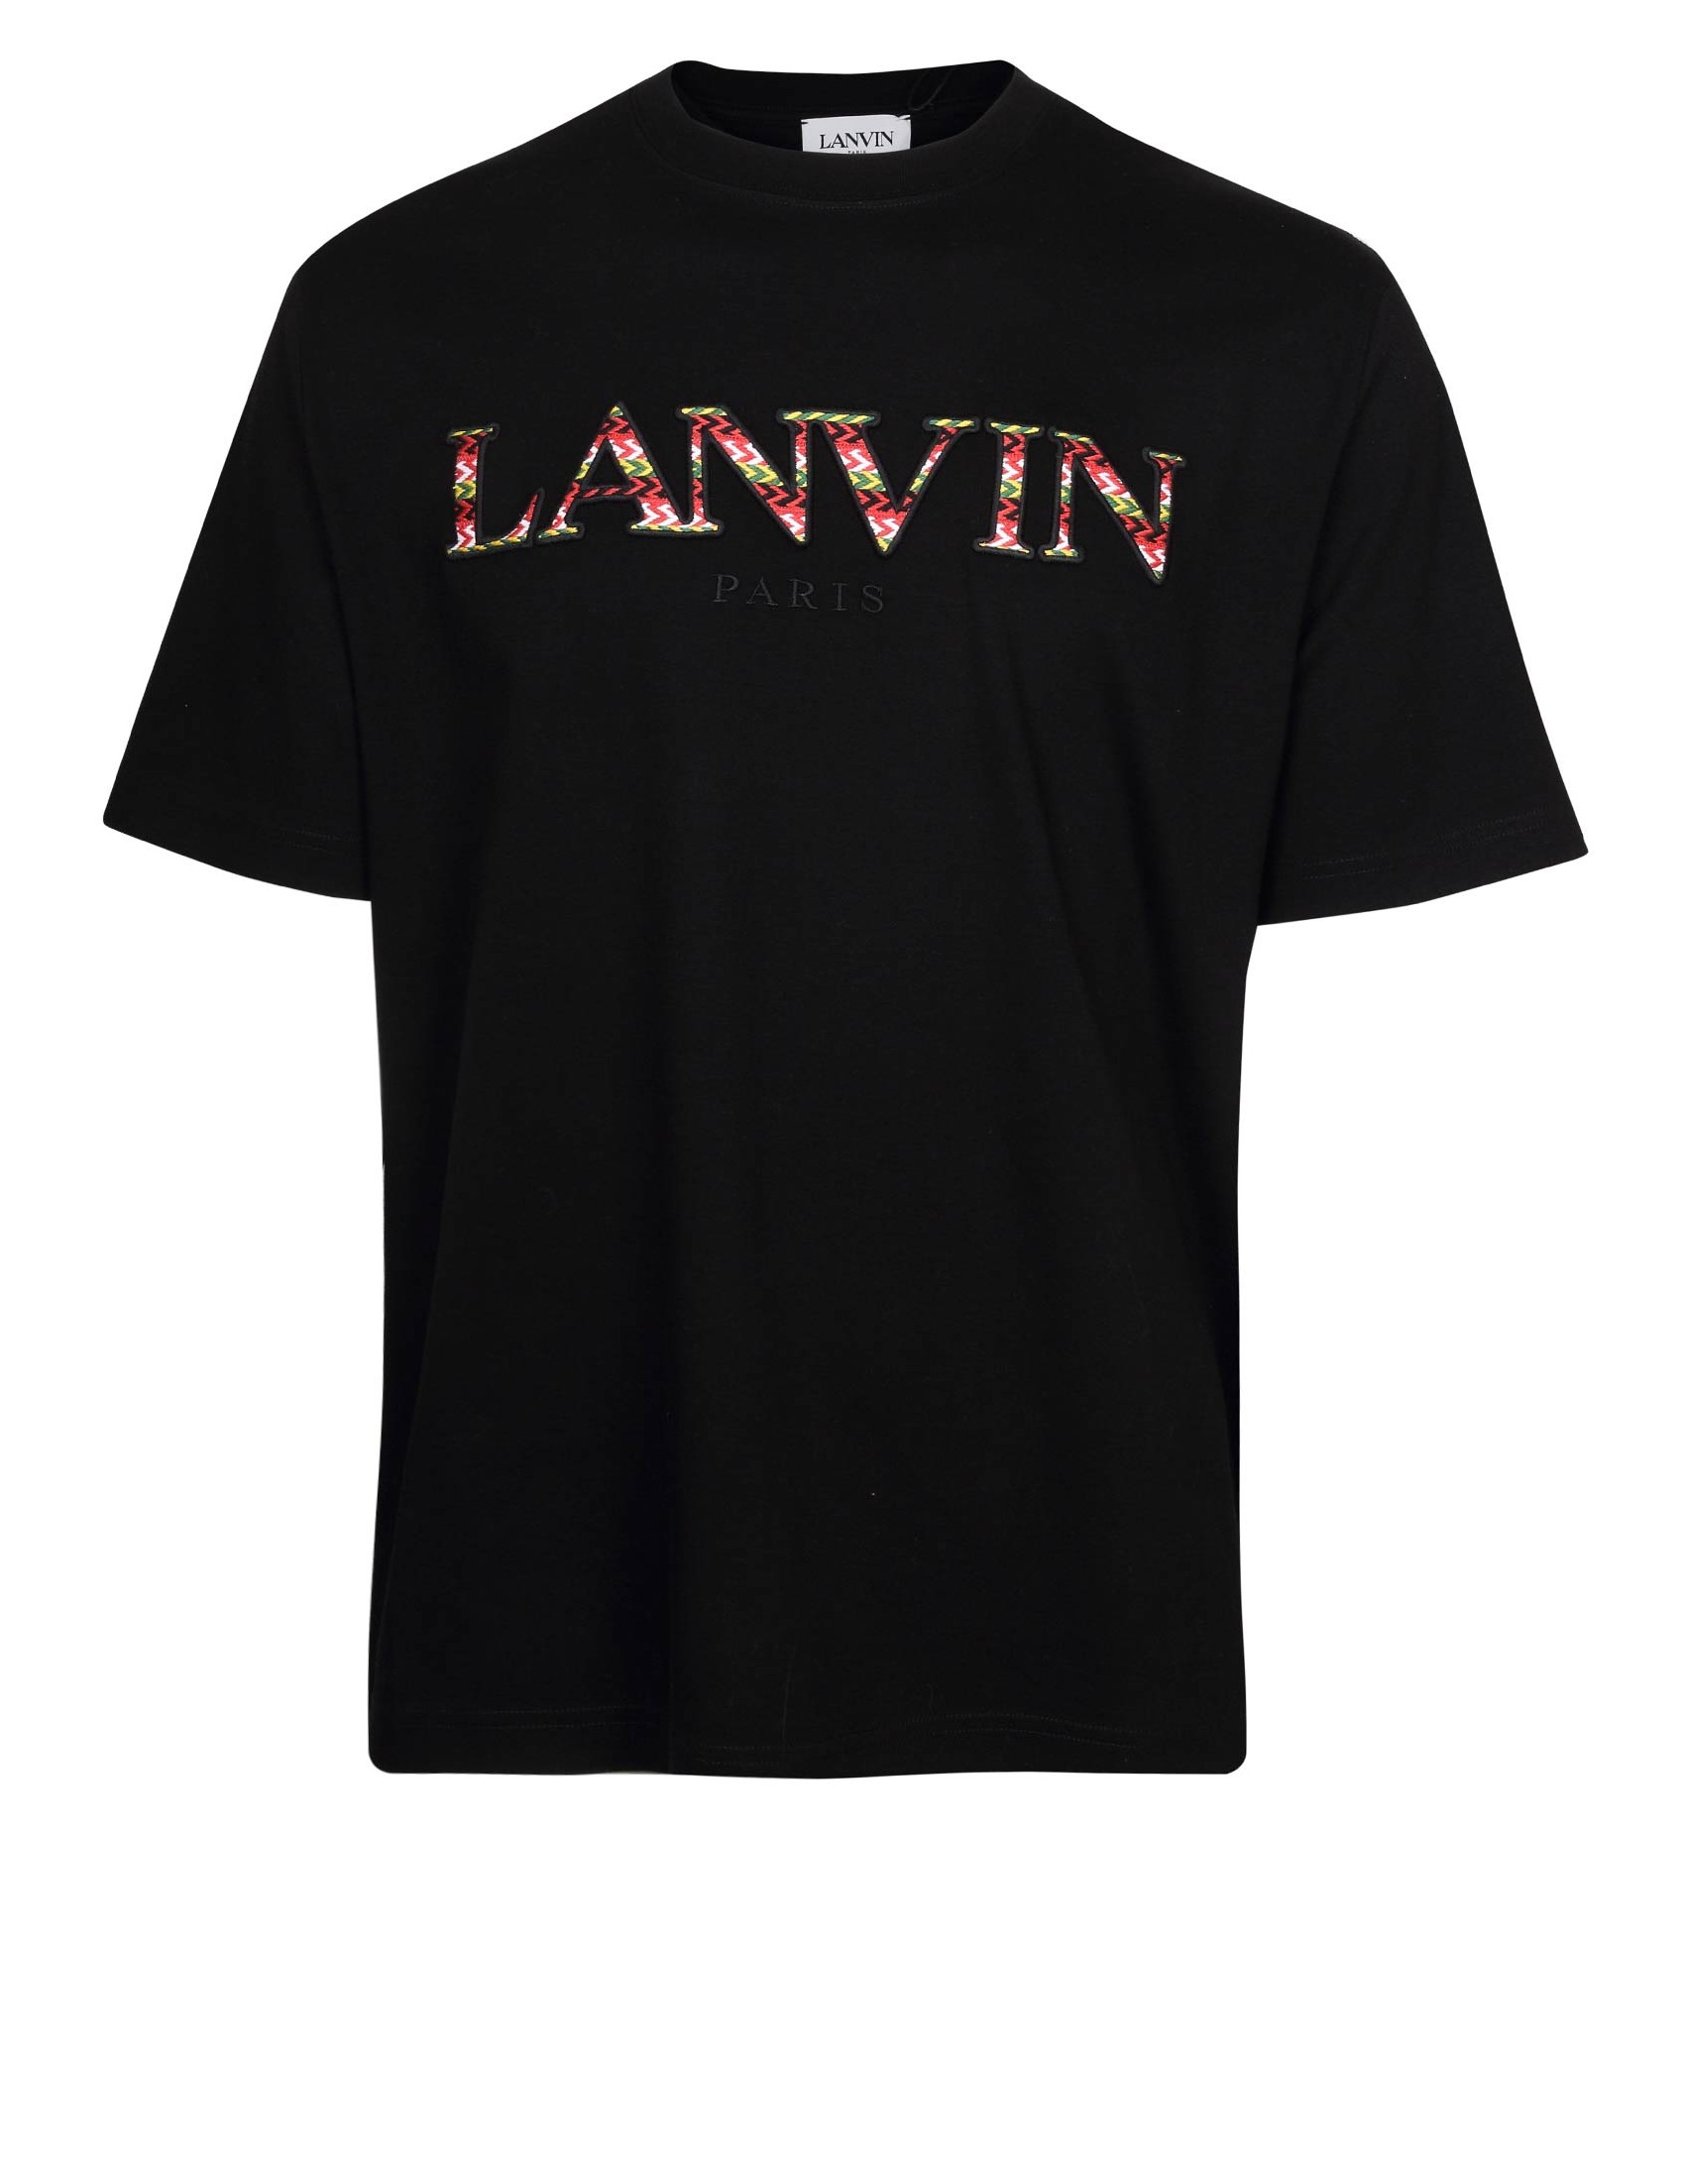 LANVIN CLASSIC COTTON T-SHIRT WITH LOGO